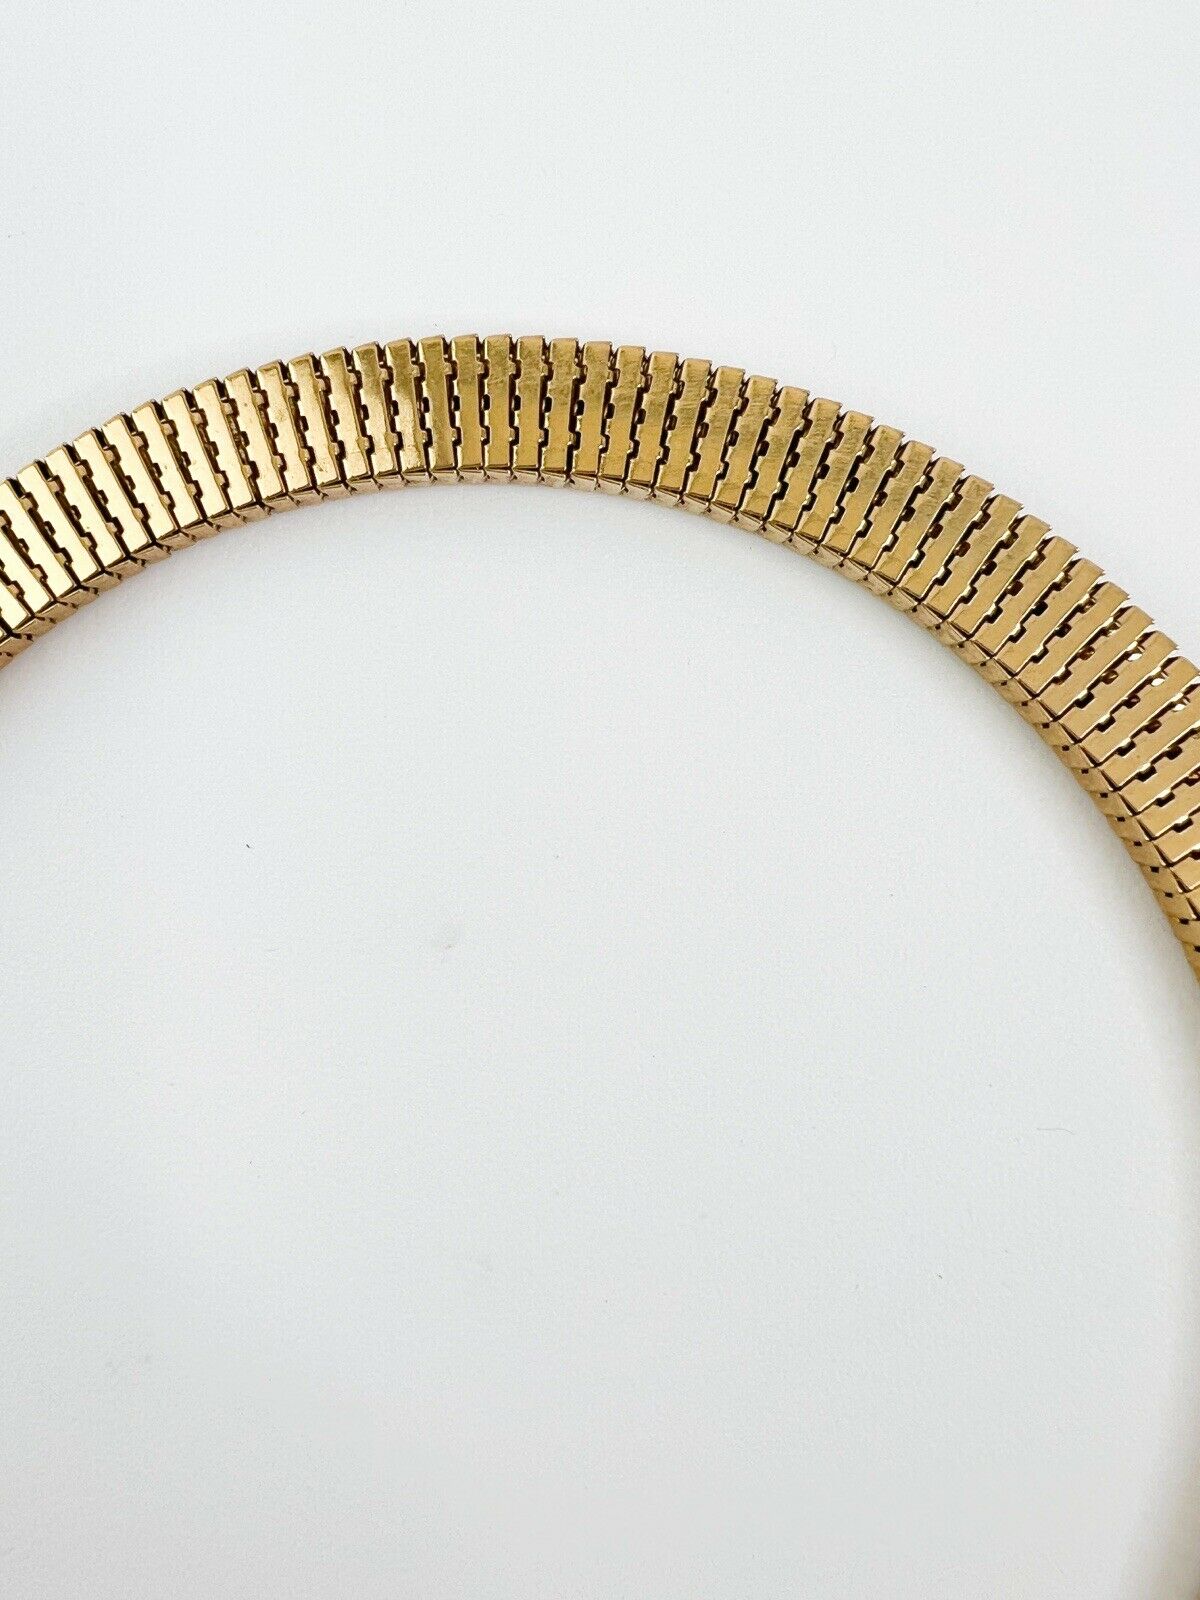 Givenchy Vintage Charm Necklace Choker Gold Rhinestones